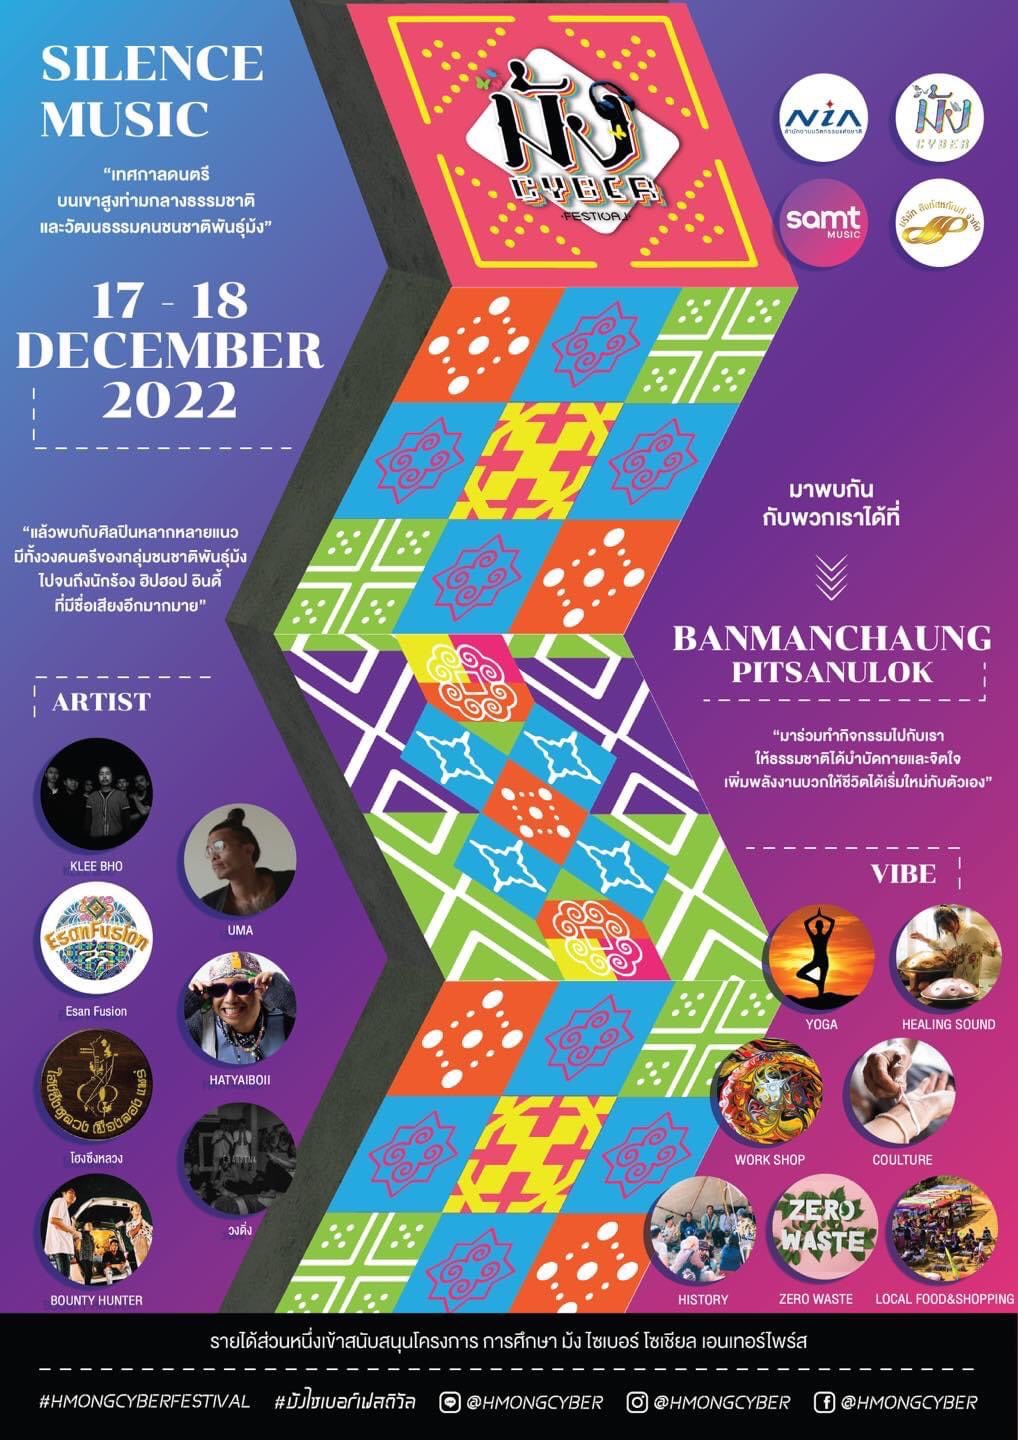 Hmong Cyber Festival 2022